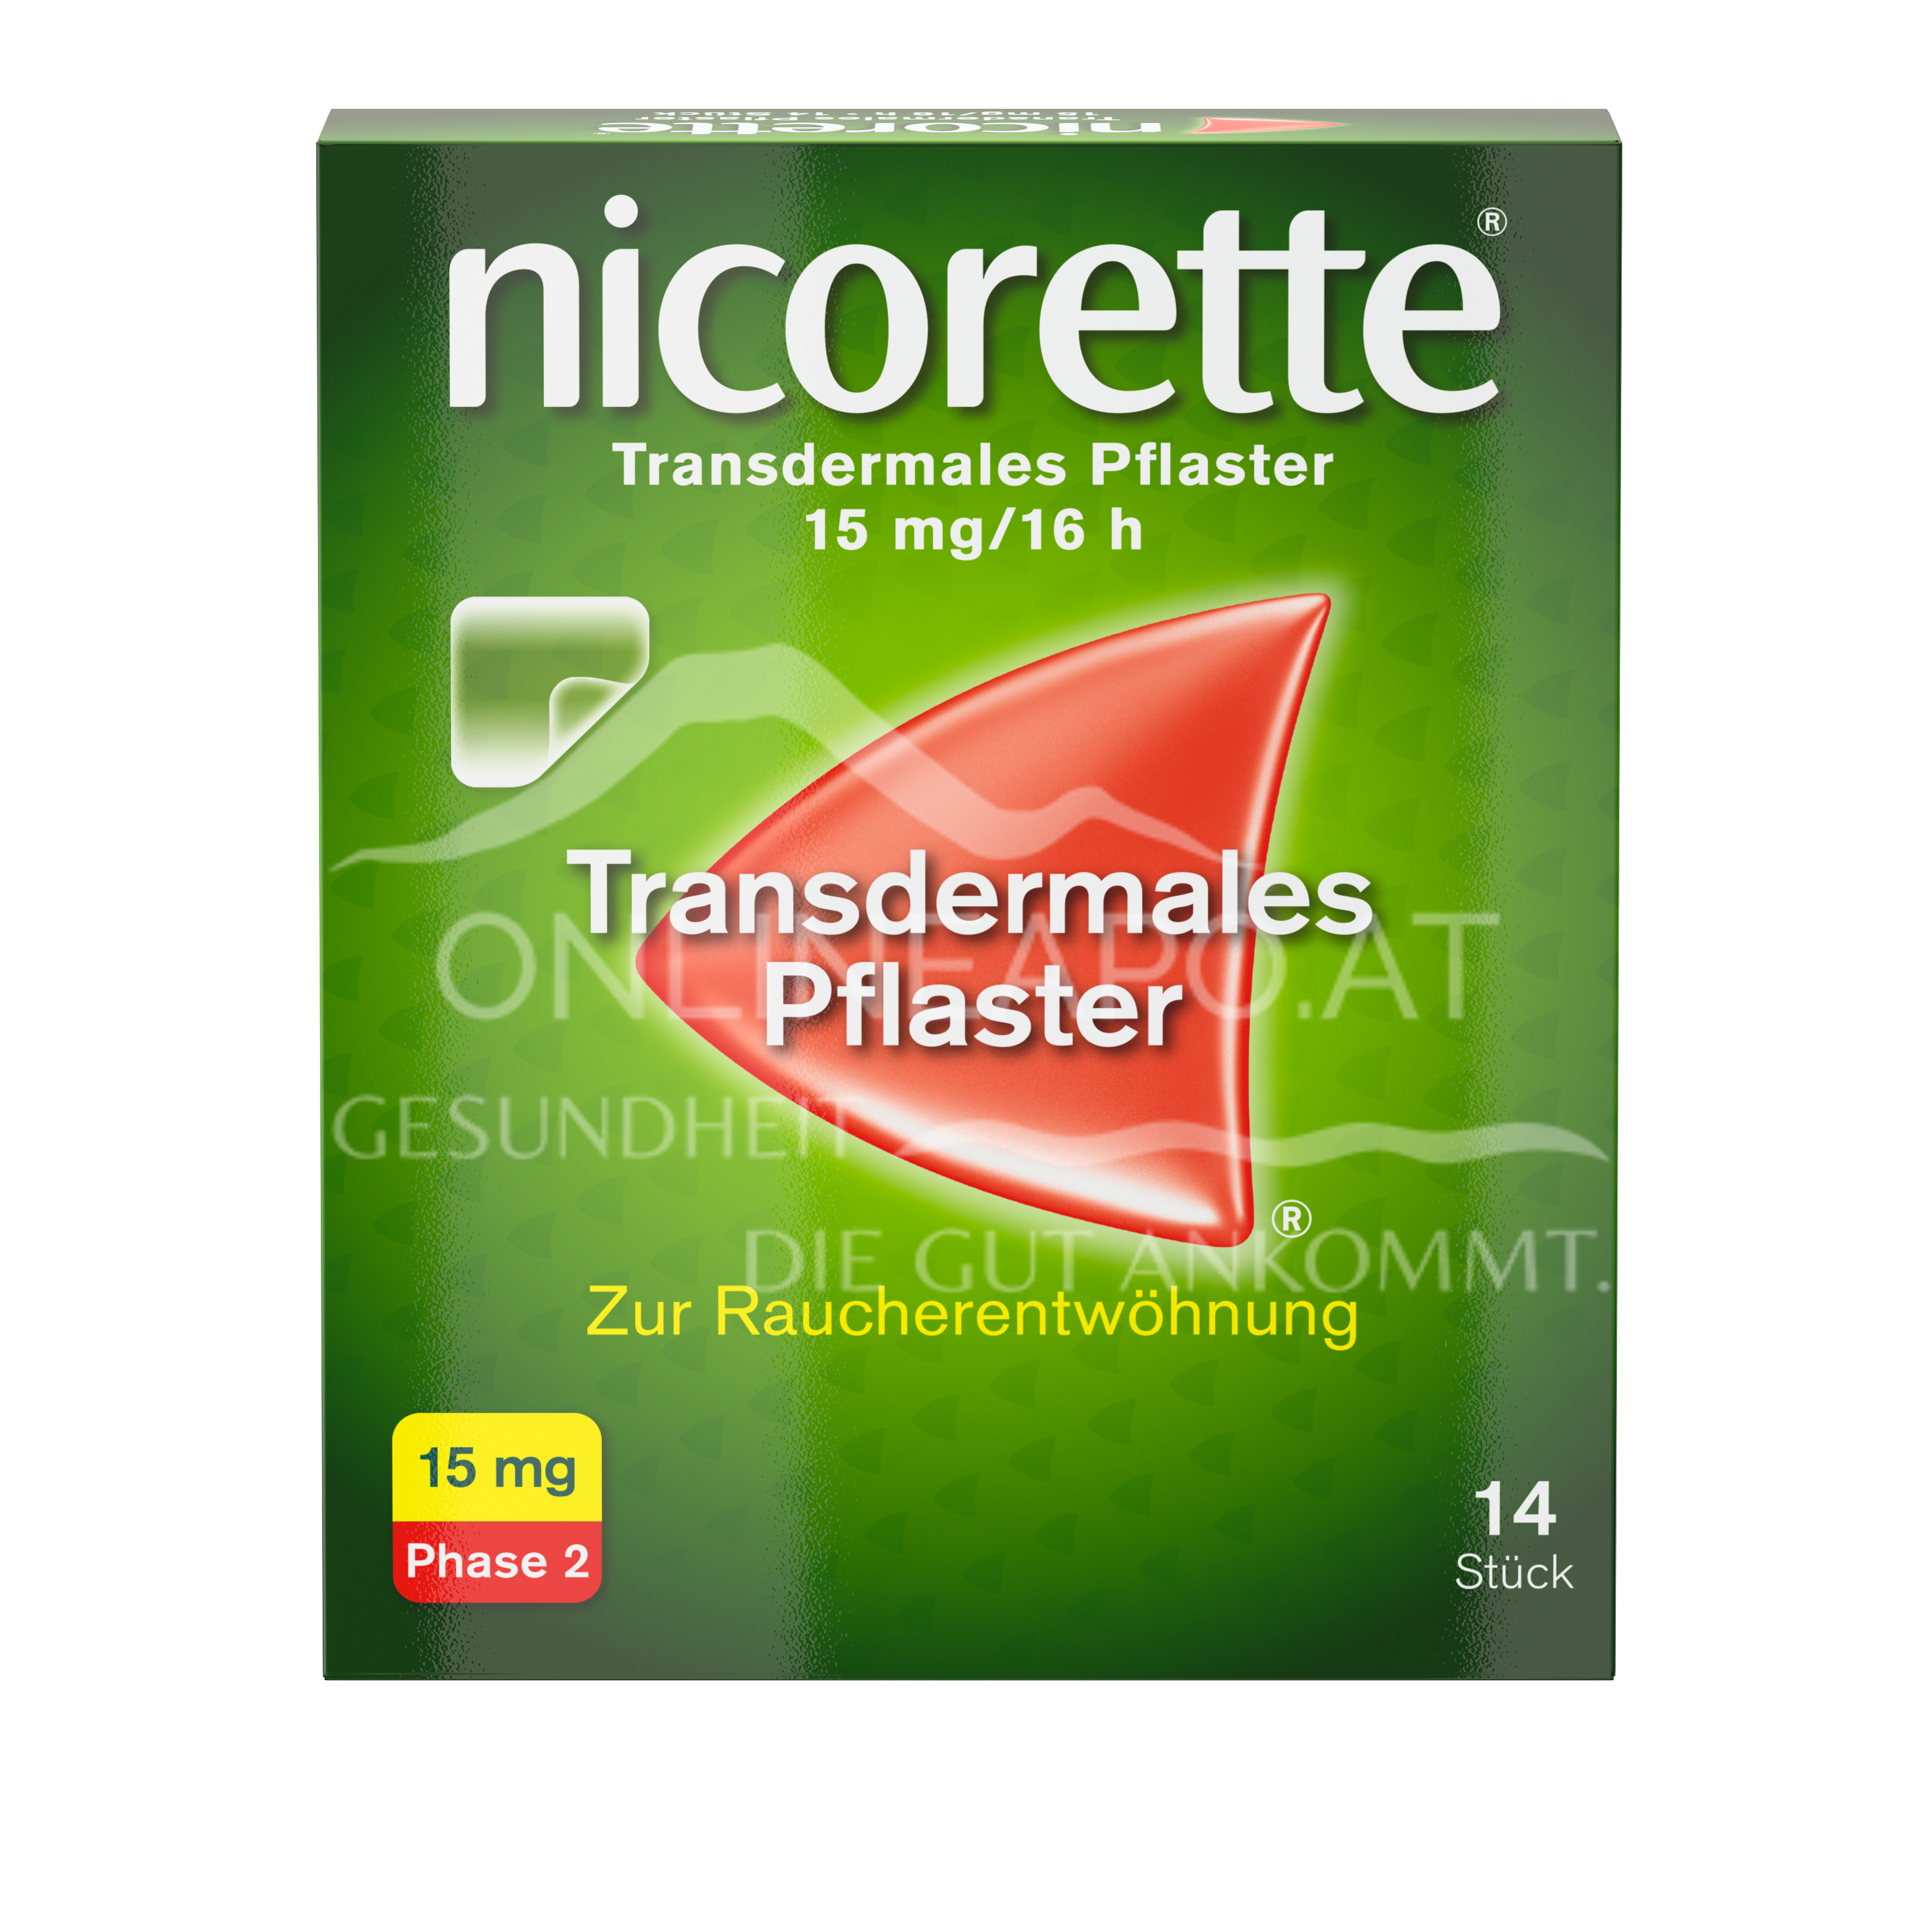 Nicorette 15 mg/16 h – transdermales Pflaster